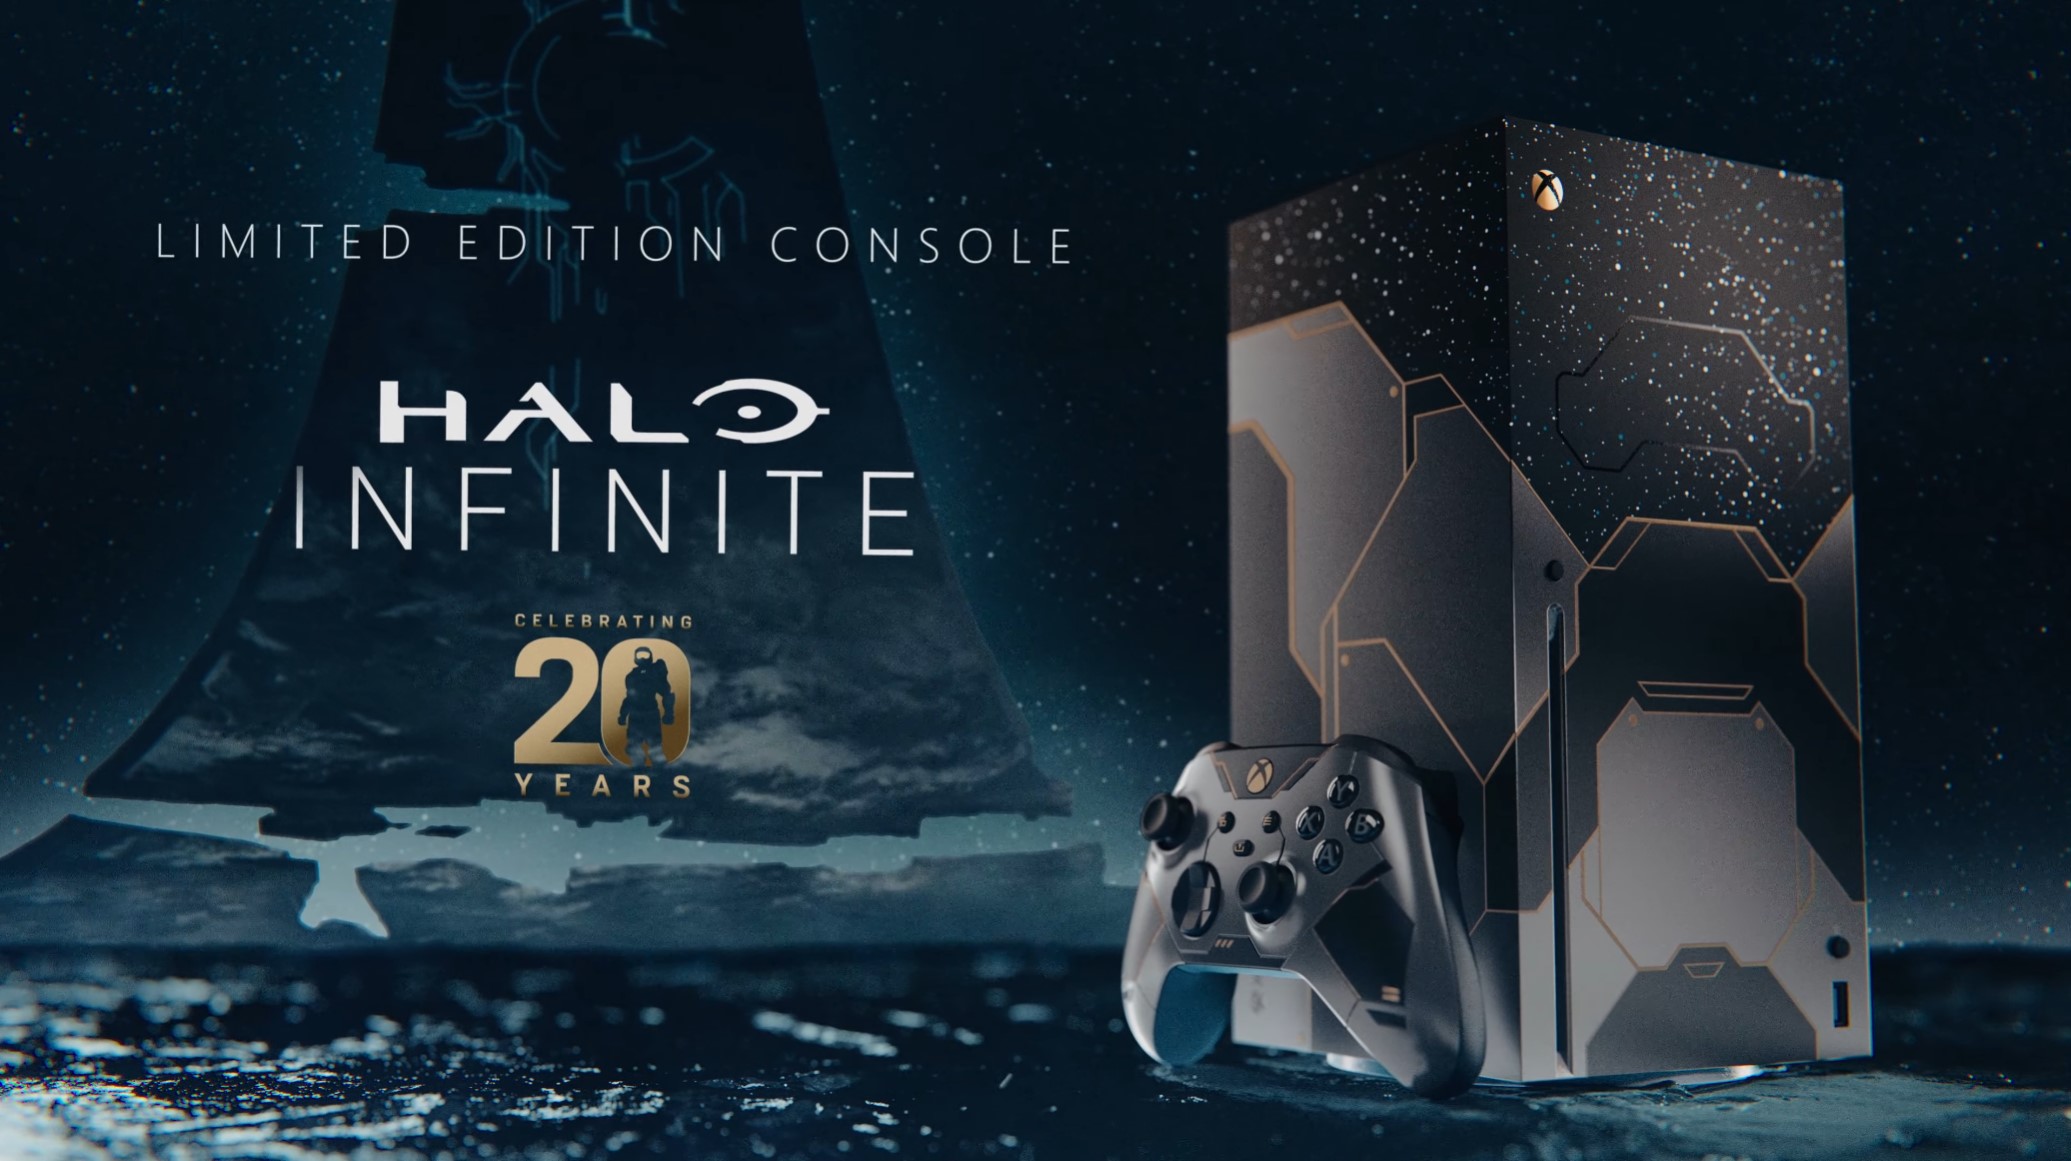 Xbox Series X 'Halo Infinite' Stock Update for Costco, GameStop